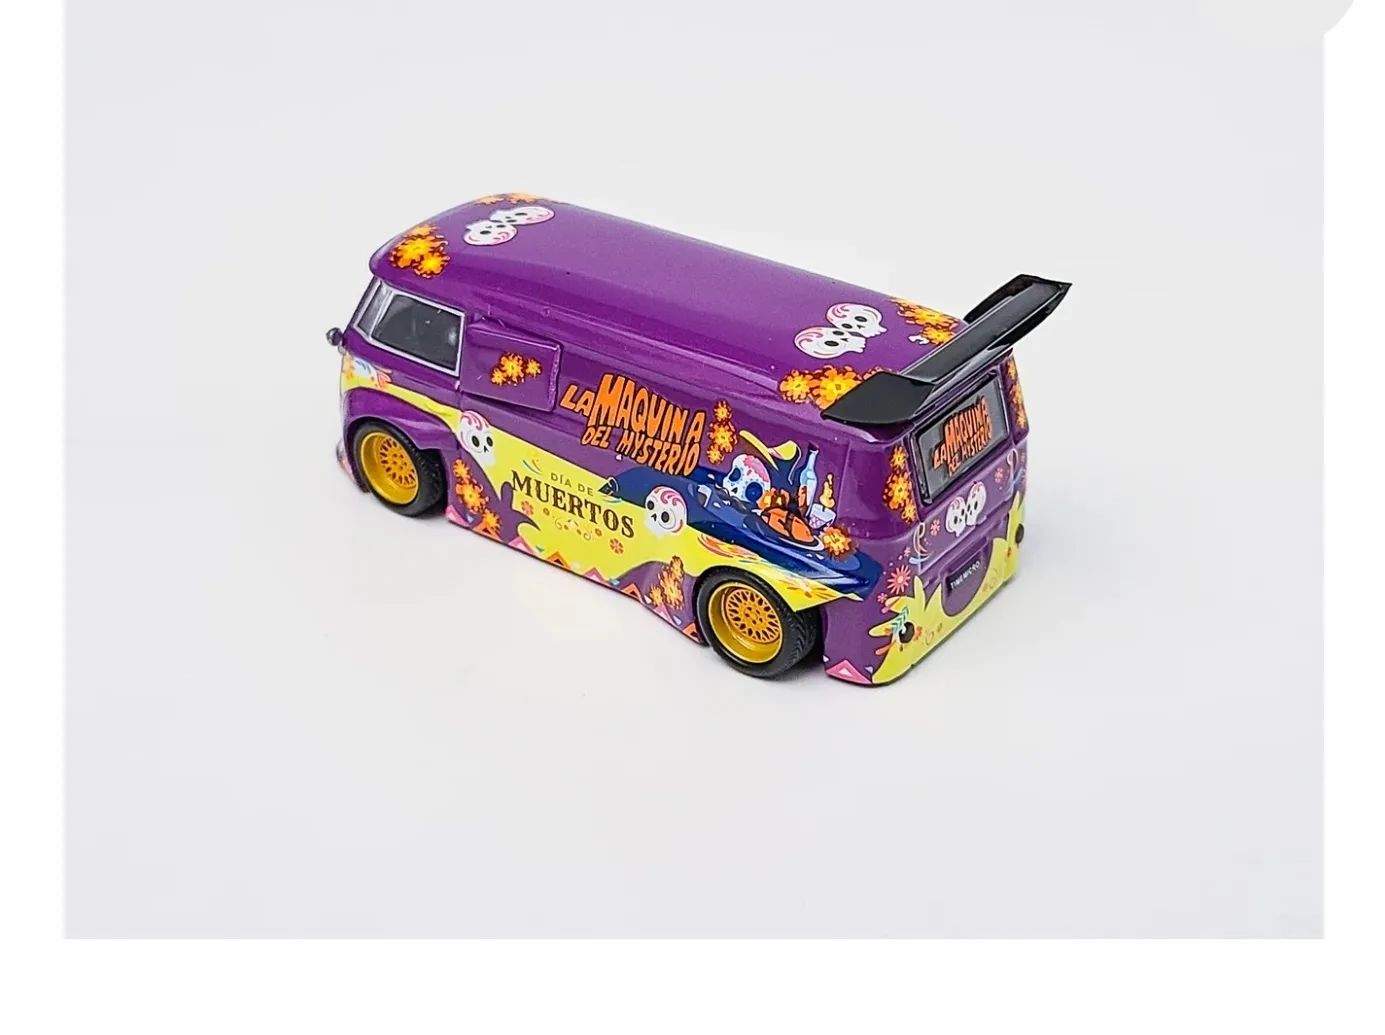 Time Micro 1/64 Volkswagen T1 Bus in Purple "El Dia De Muertos"